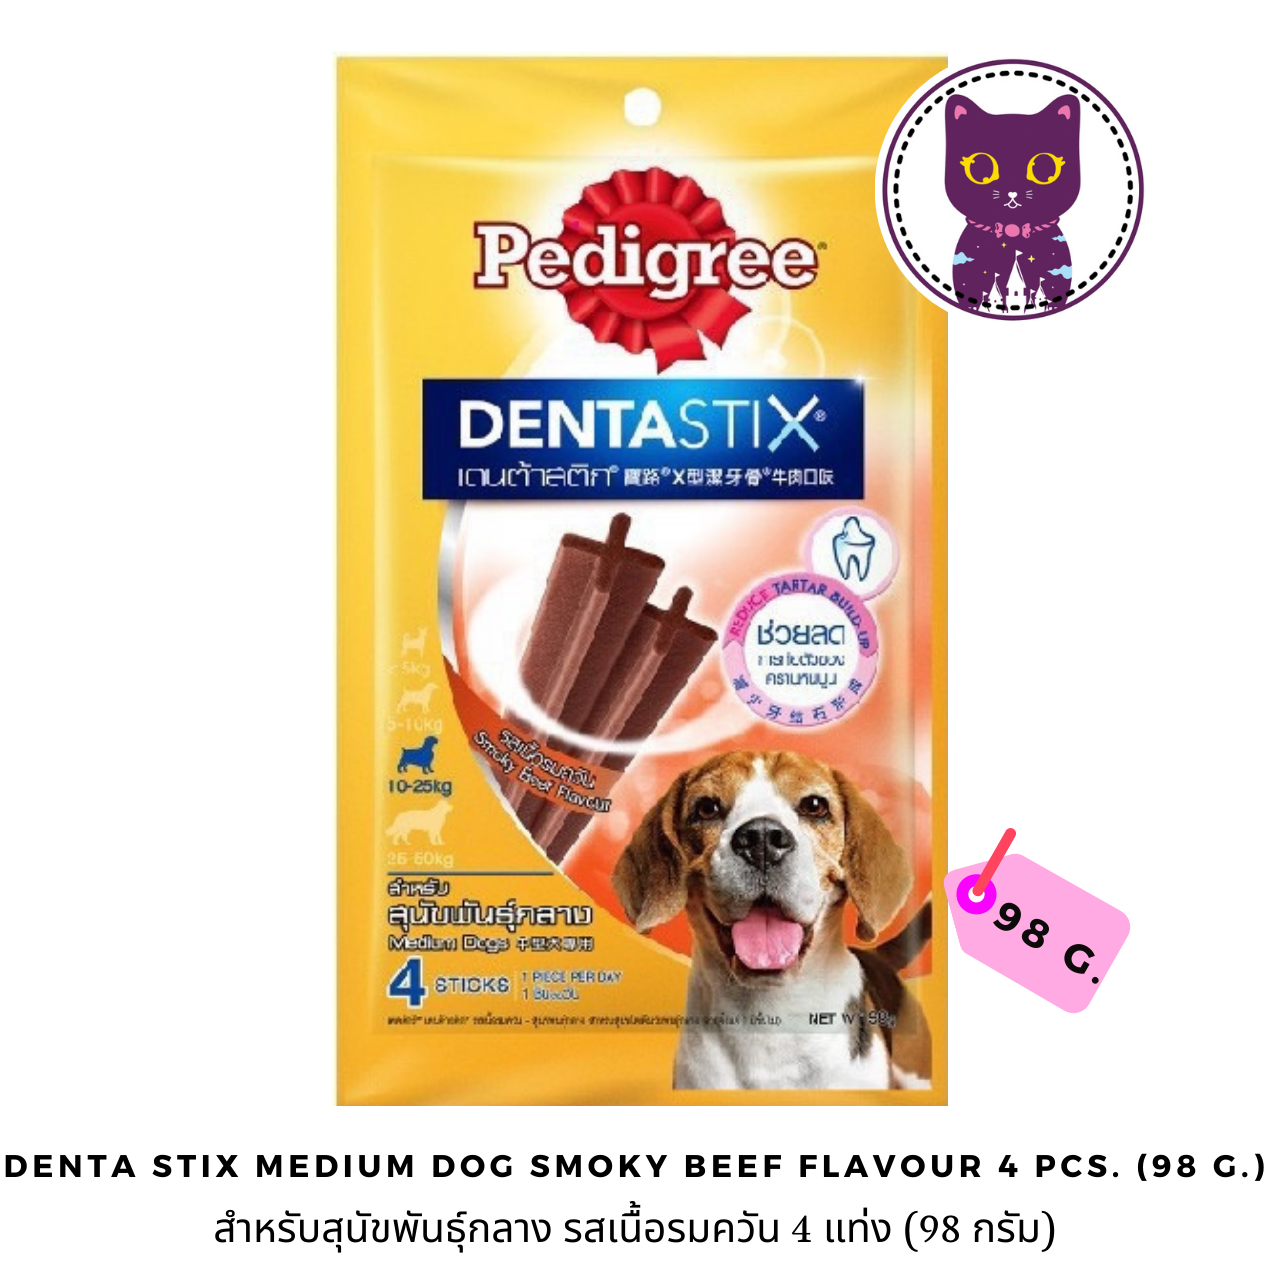 [WSP] Pedigree Denta Stix Smoky Beef Flavor (Medium Dogs) เพ็ดดิกรี ขนมขัดฟันสุนัขรูปตัว X สำหรับสุนัขพันธุ์กลาง รสเนื้อรมควัน  4 แท่ง